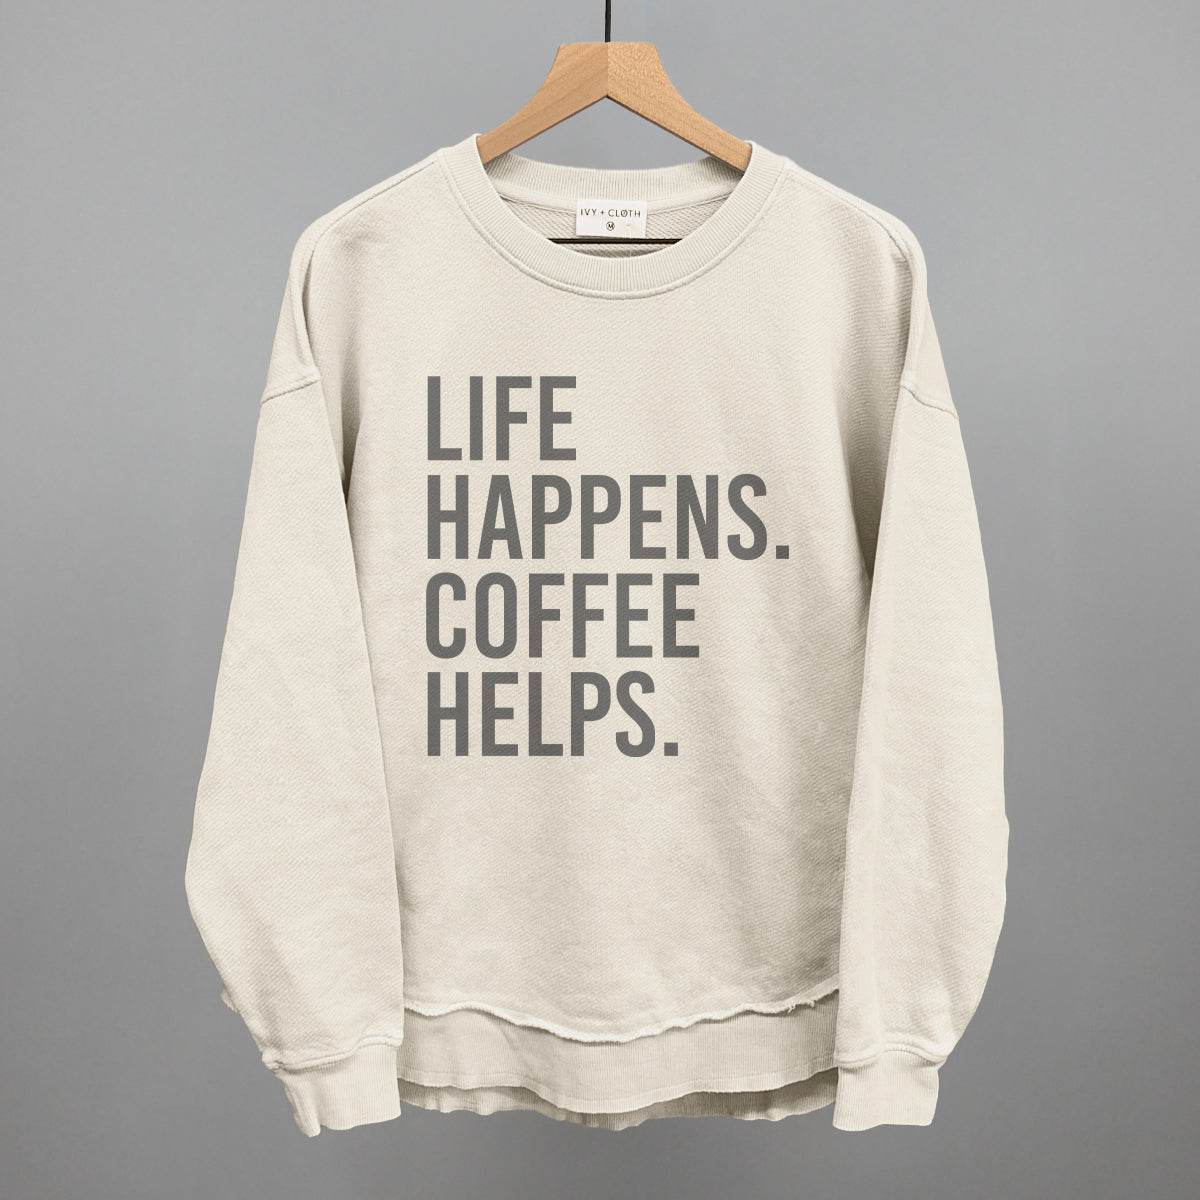 Life Happens. Coffee Helps.